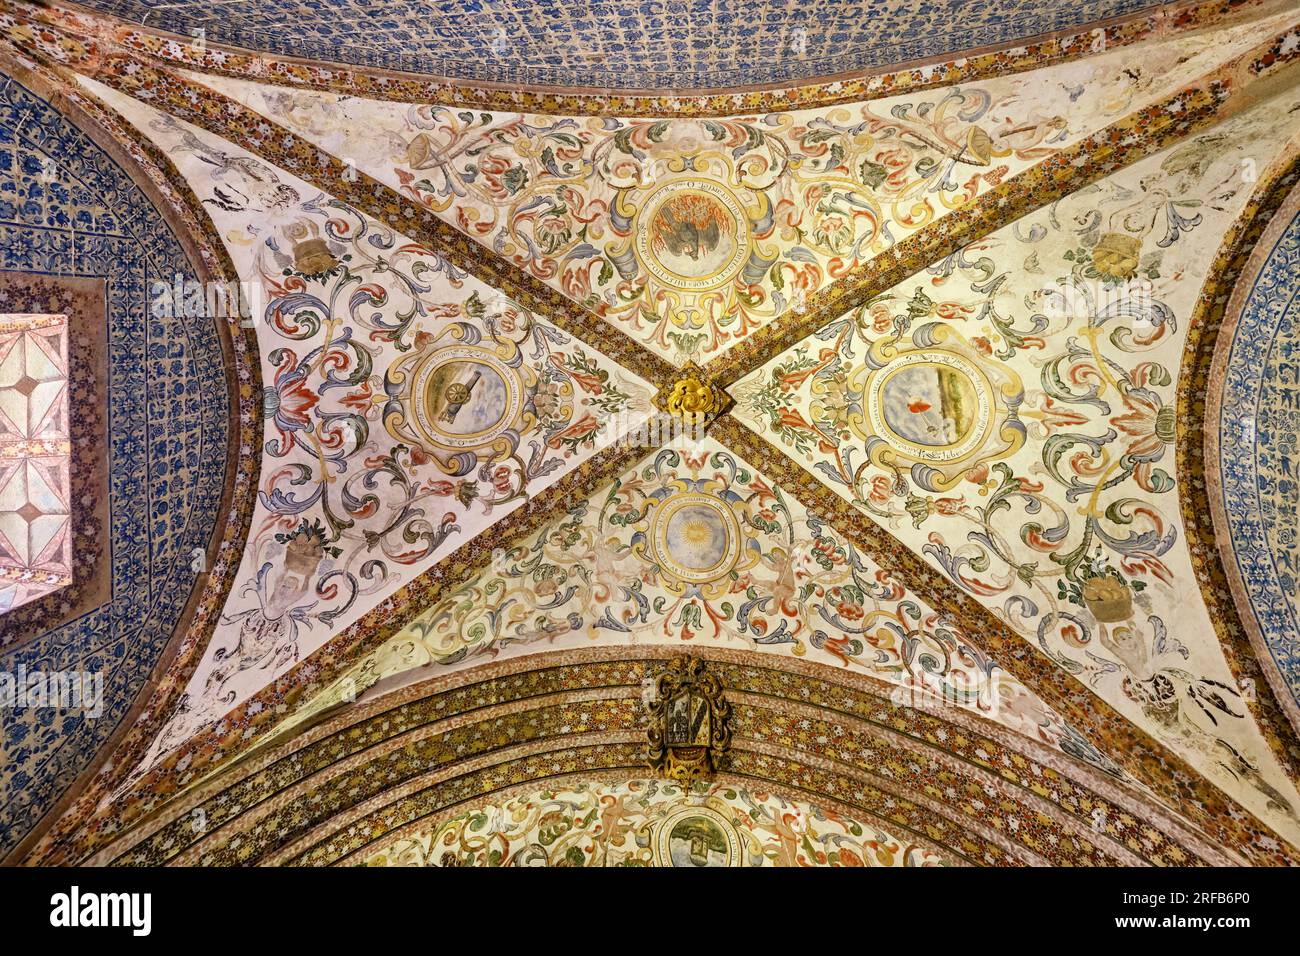 Ceiling of the Sacristy of the Church of the Monastery of Sao Joao de Tarouca. Tarouca, Portugal Stock Photo